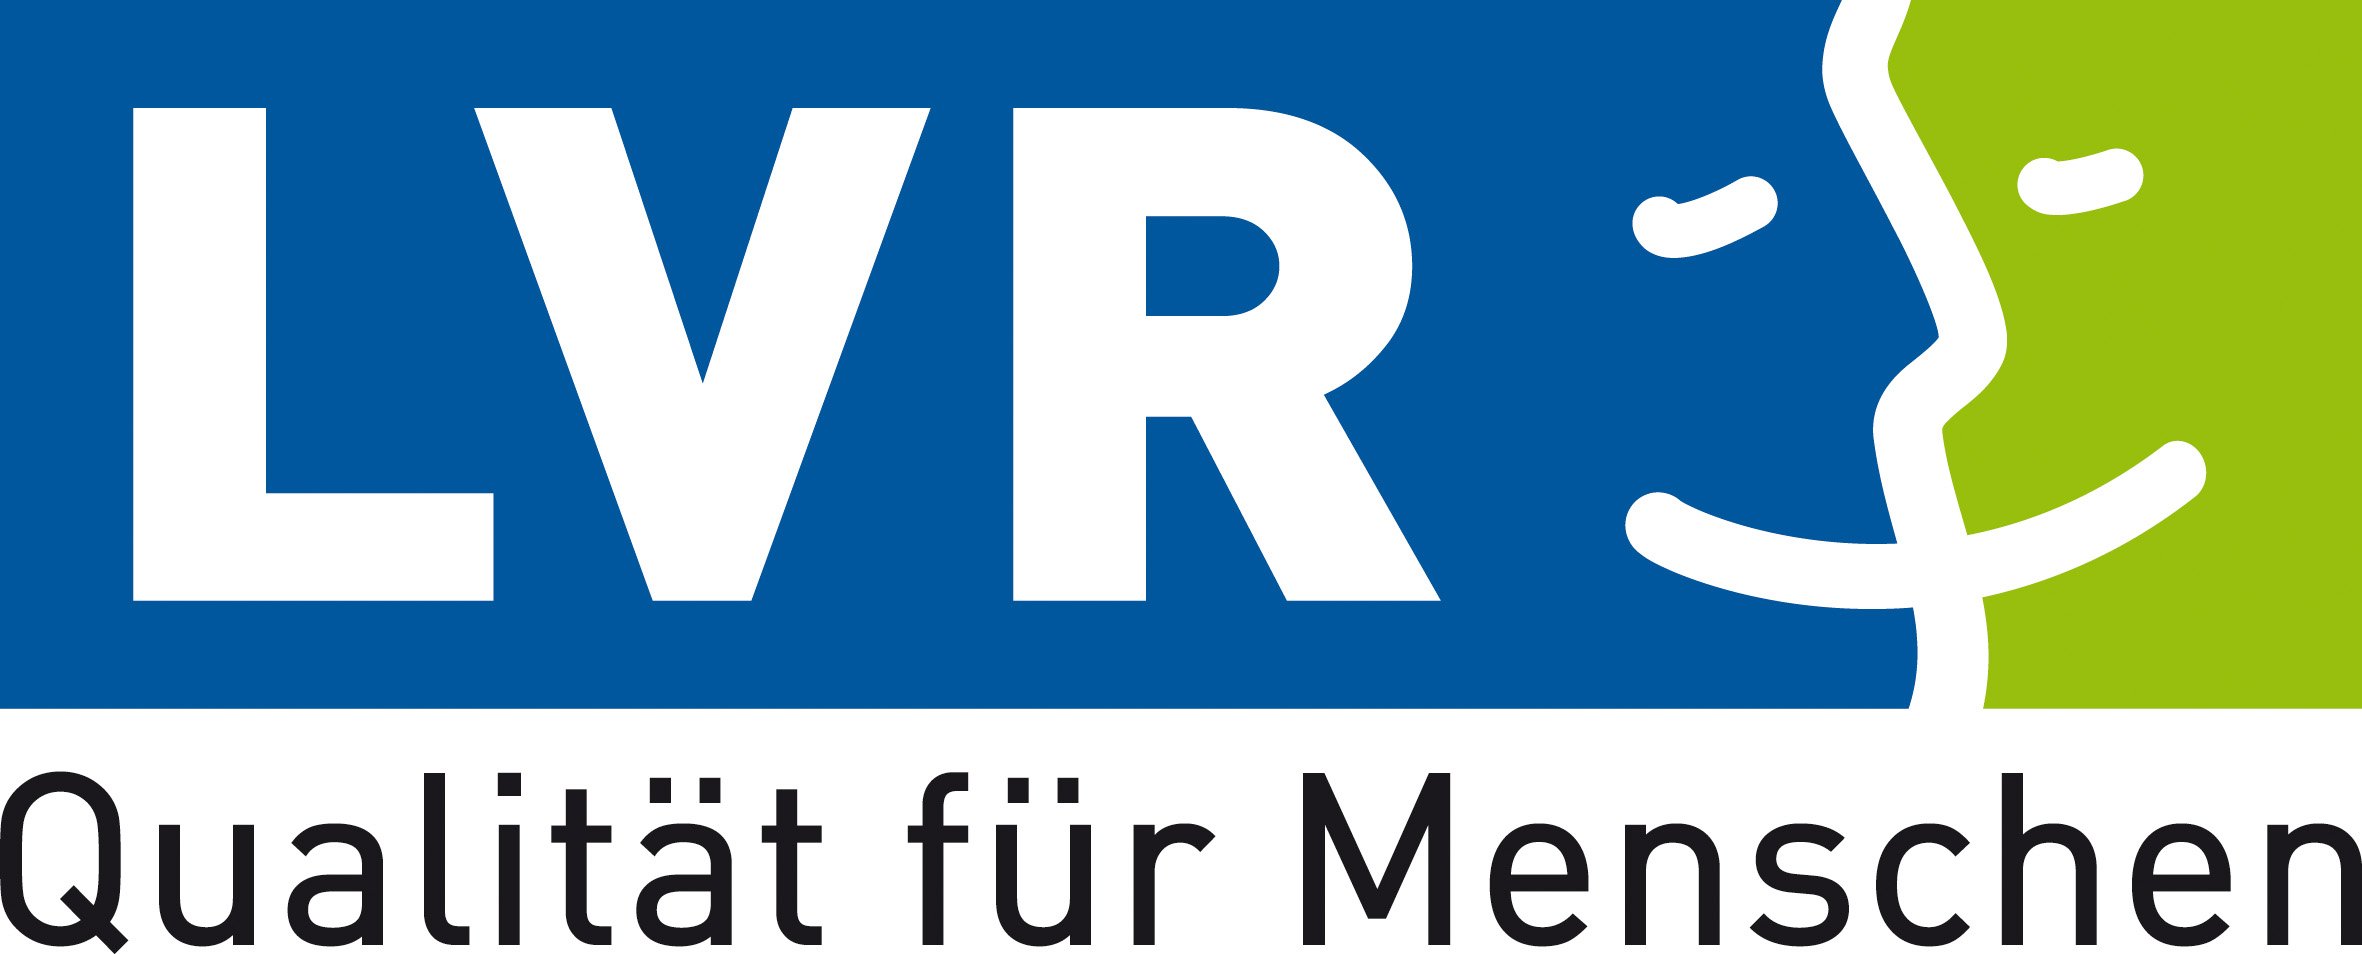 Logo: LVR